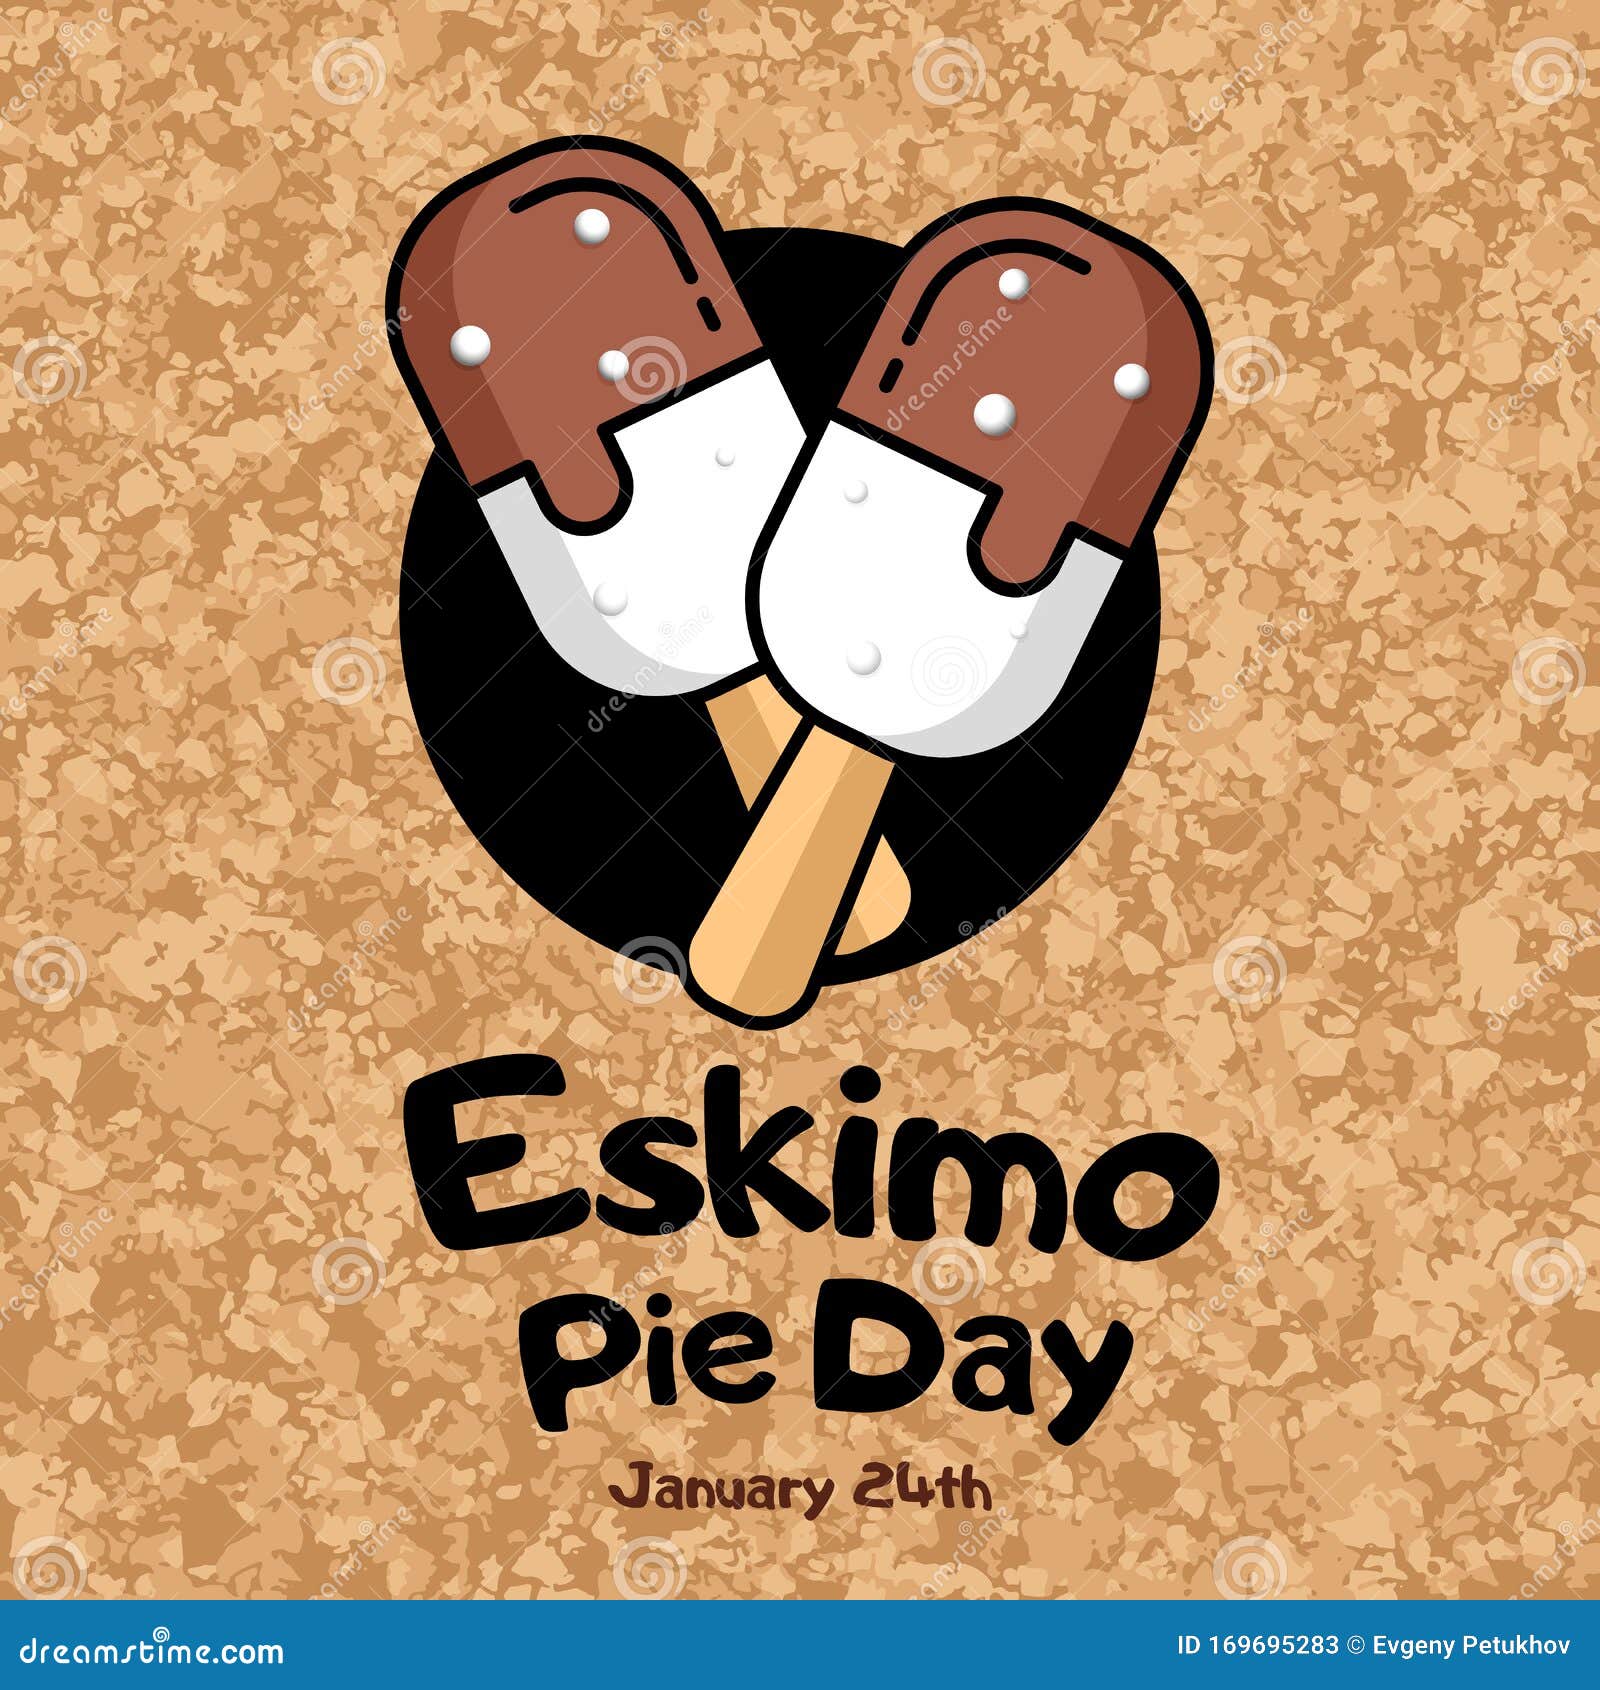 500 эскимо. International Eskimo pie Day. Мороженое Eskimo pie. 500 Эскимо картинки. Пятьсот эскимо.